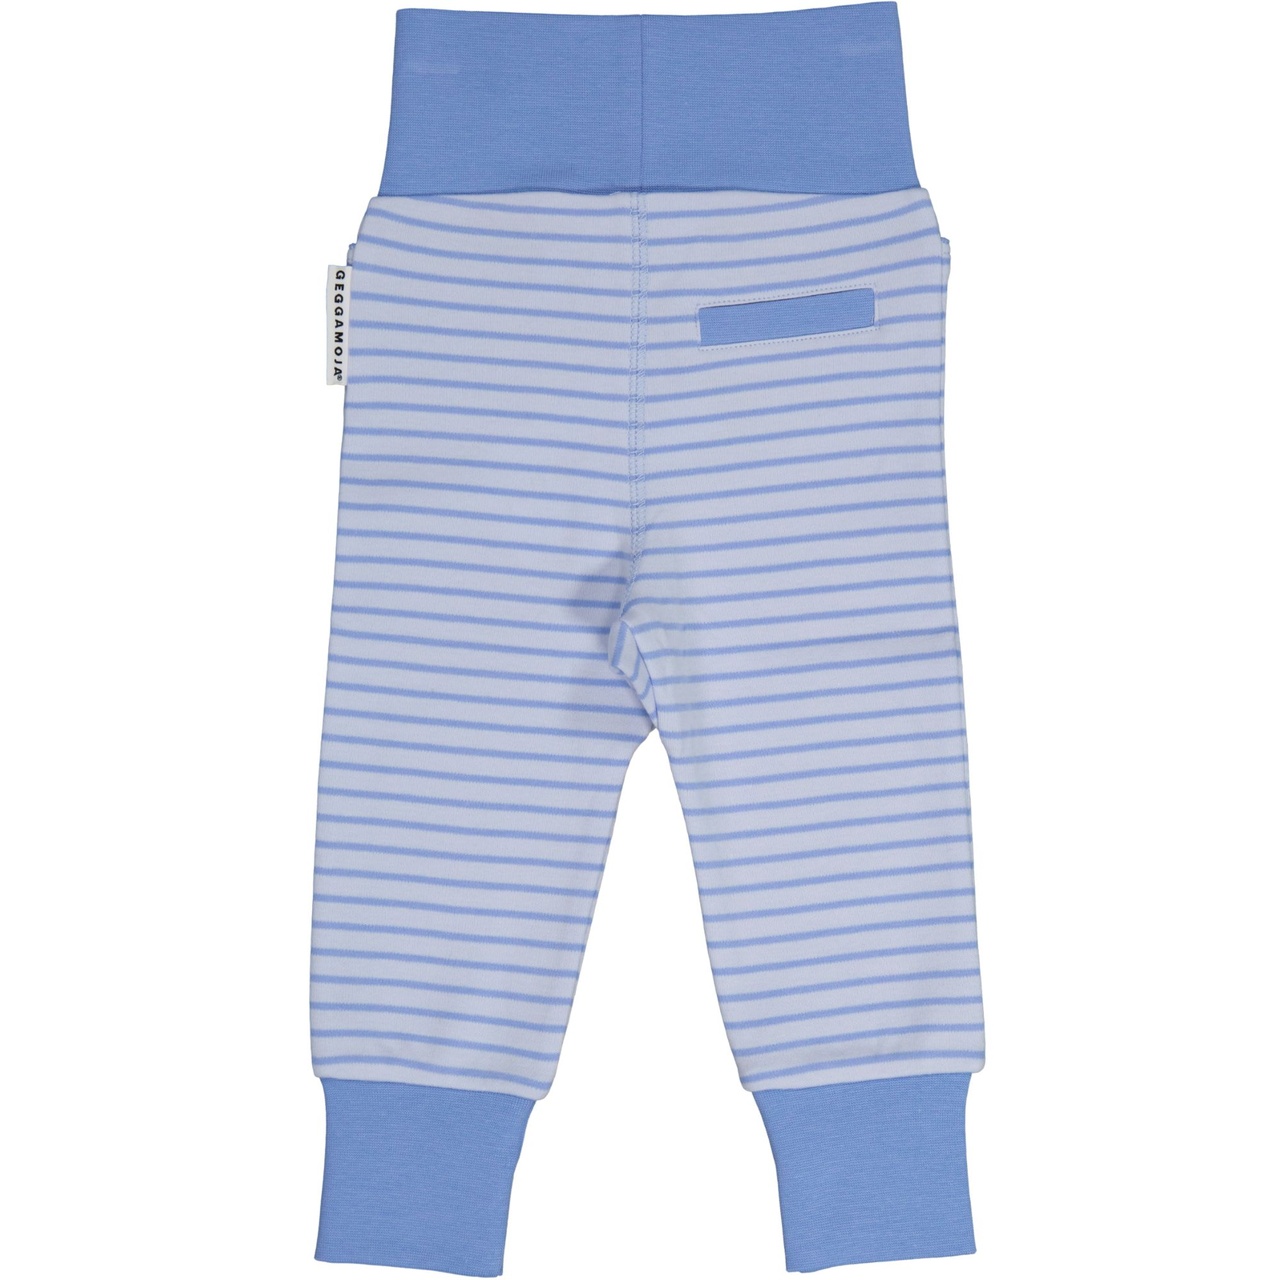 Baby pants Light blue/blue  74/80